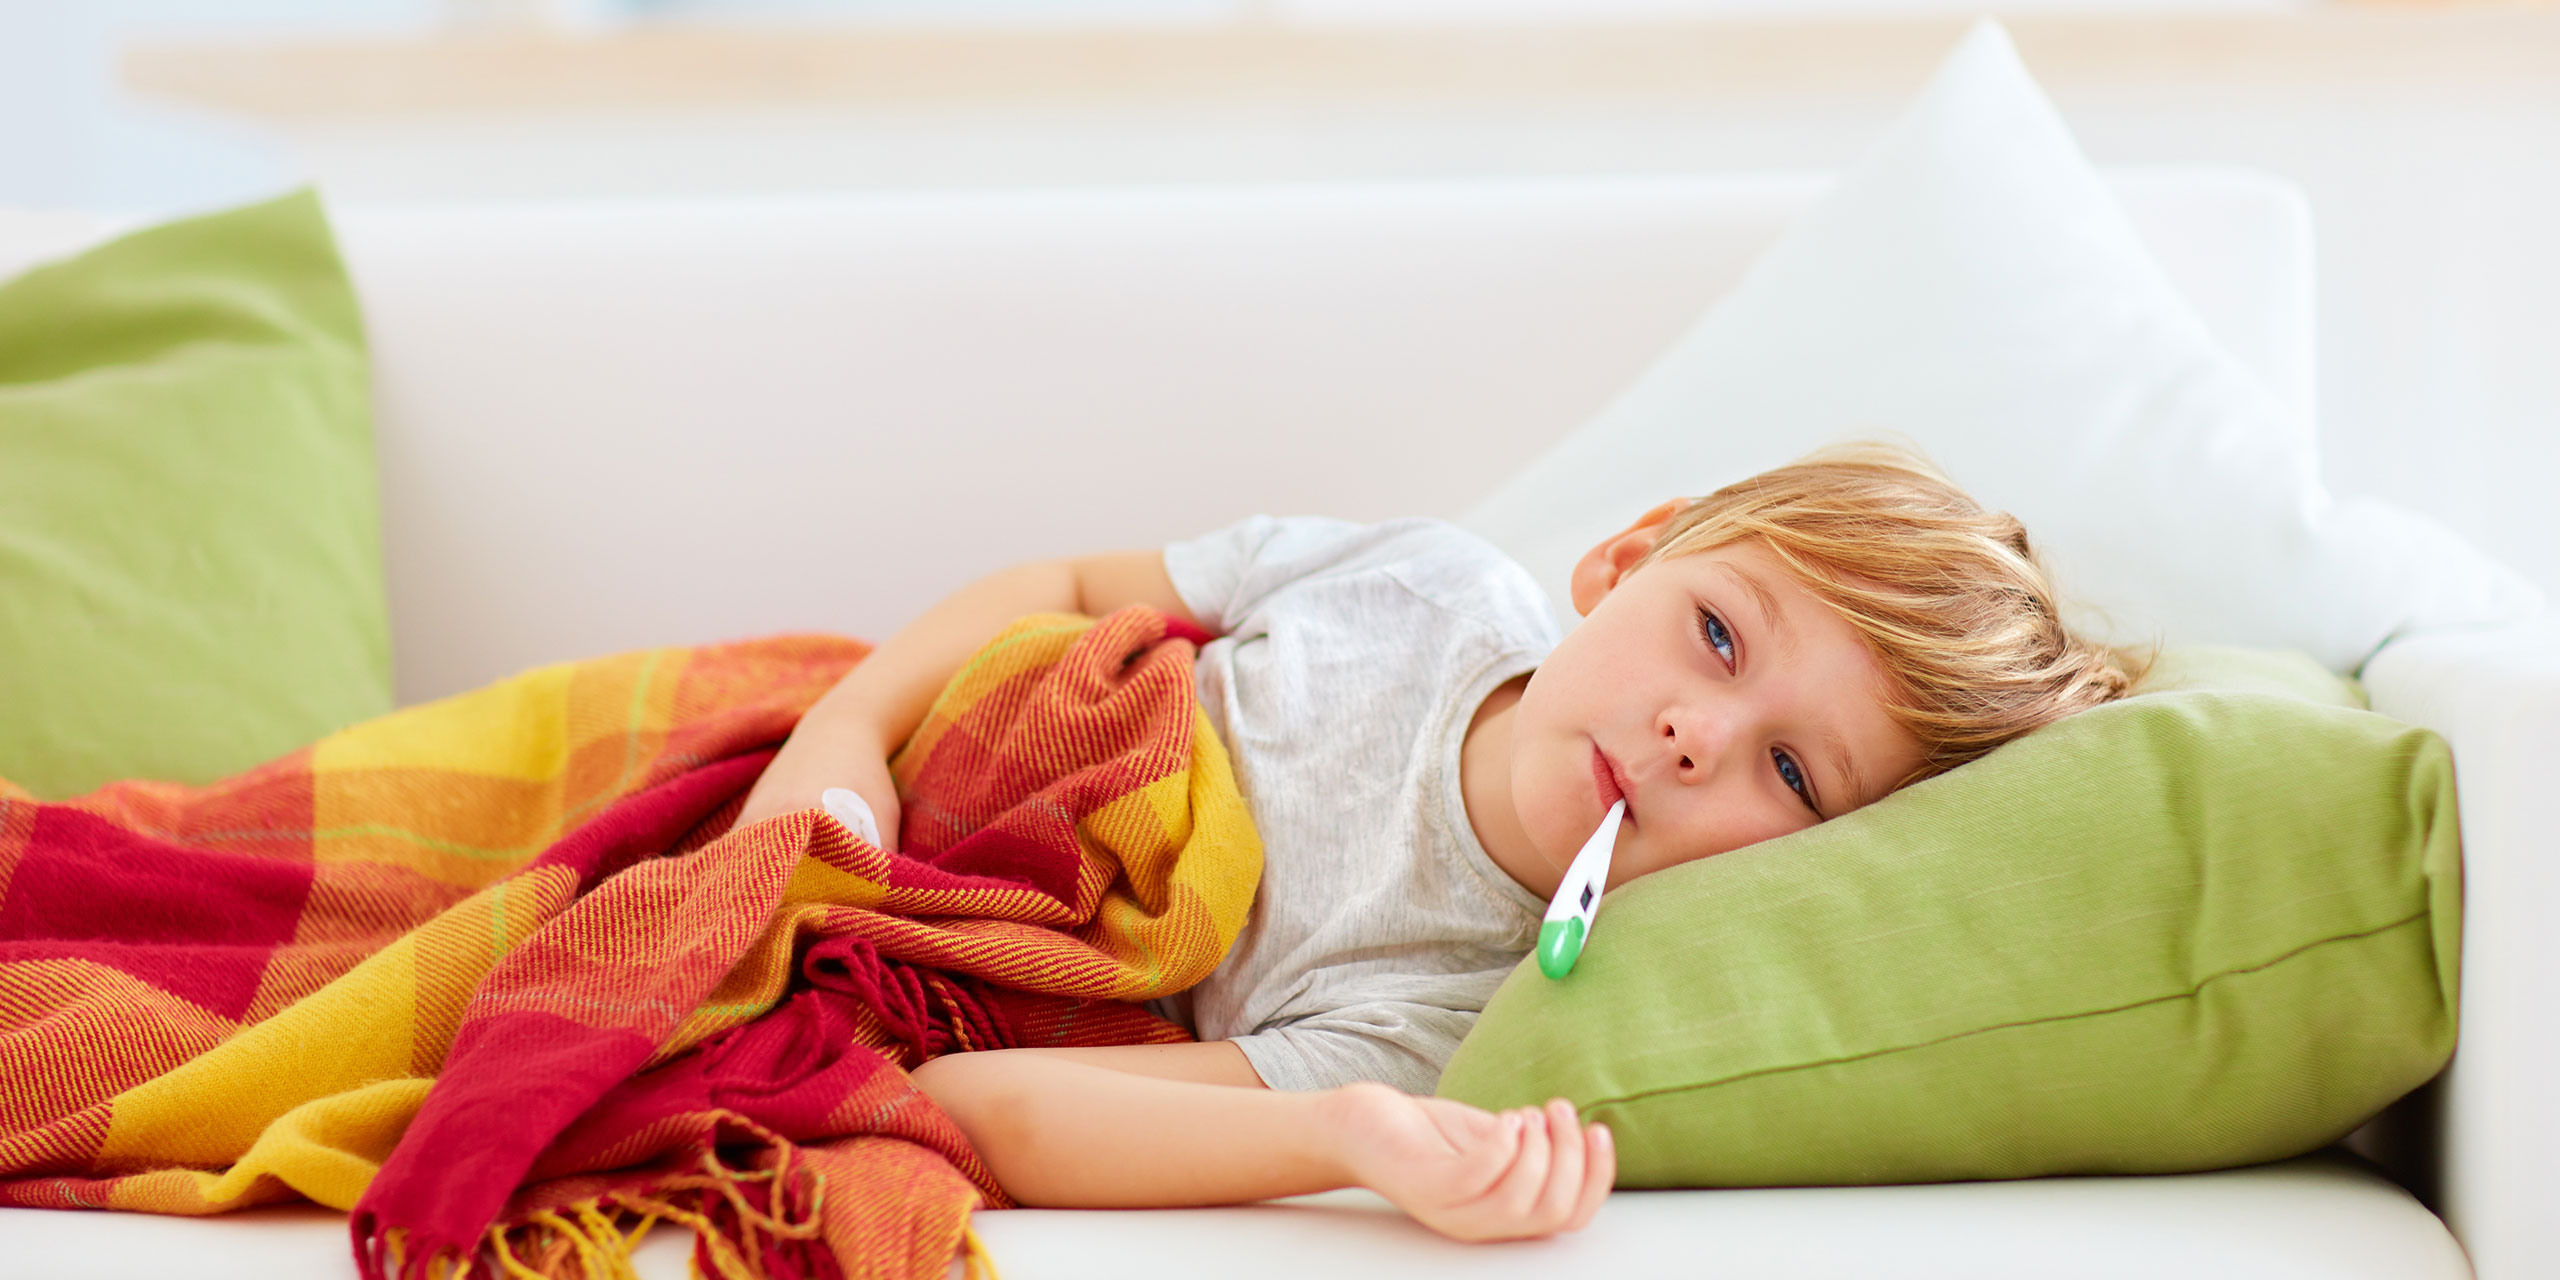 Sick Child on Sofa; Courtesy of Olesia Bilke/Shutterstock.com